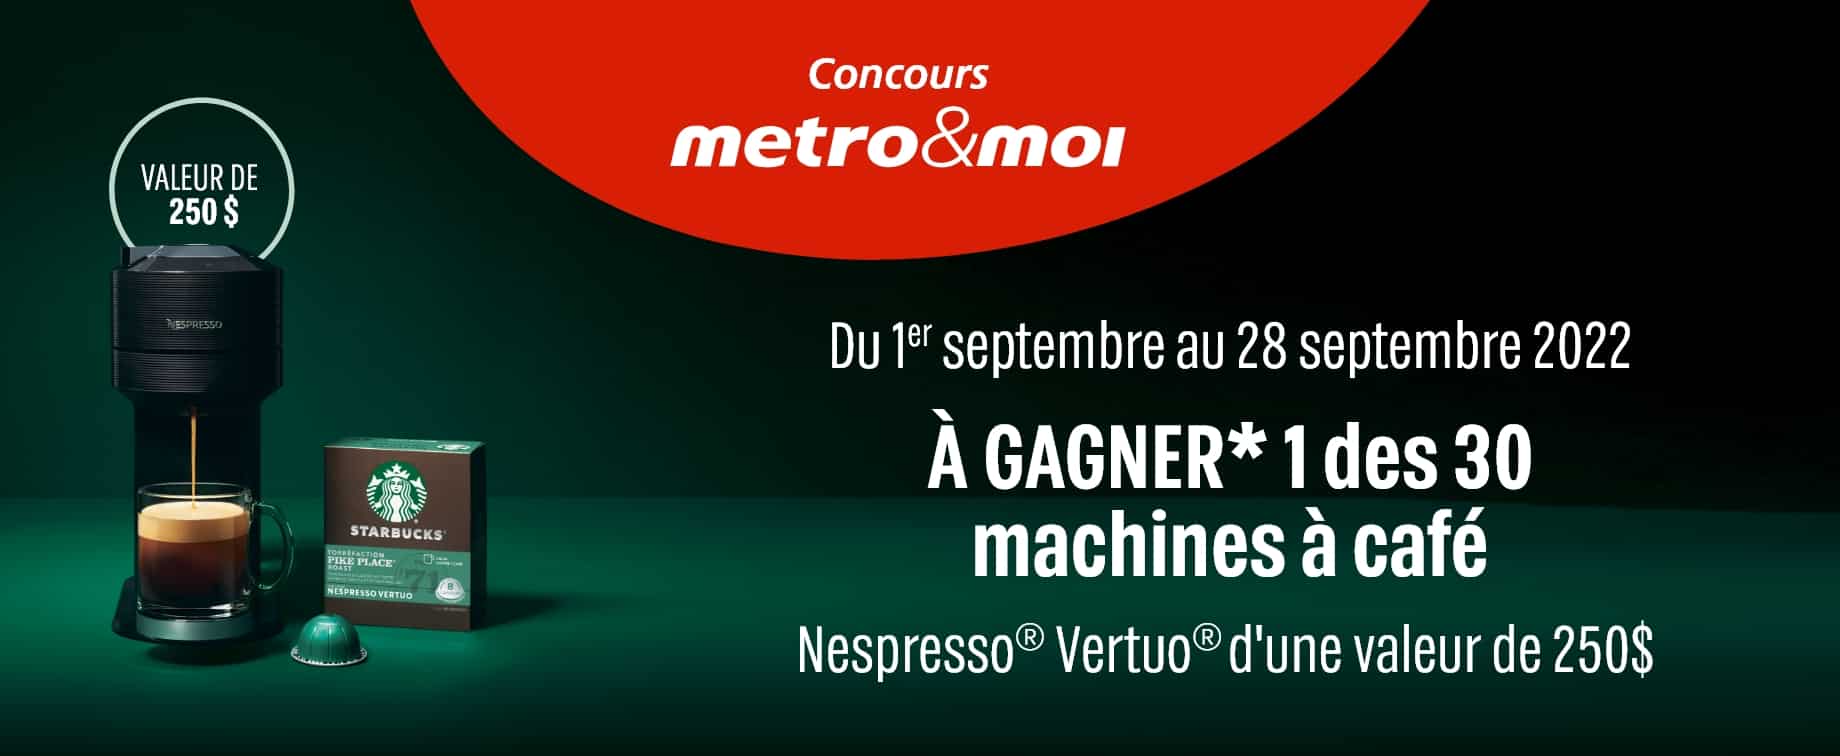 metro concours nespresso vertuo machine